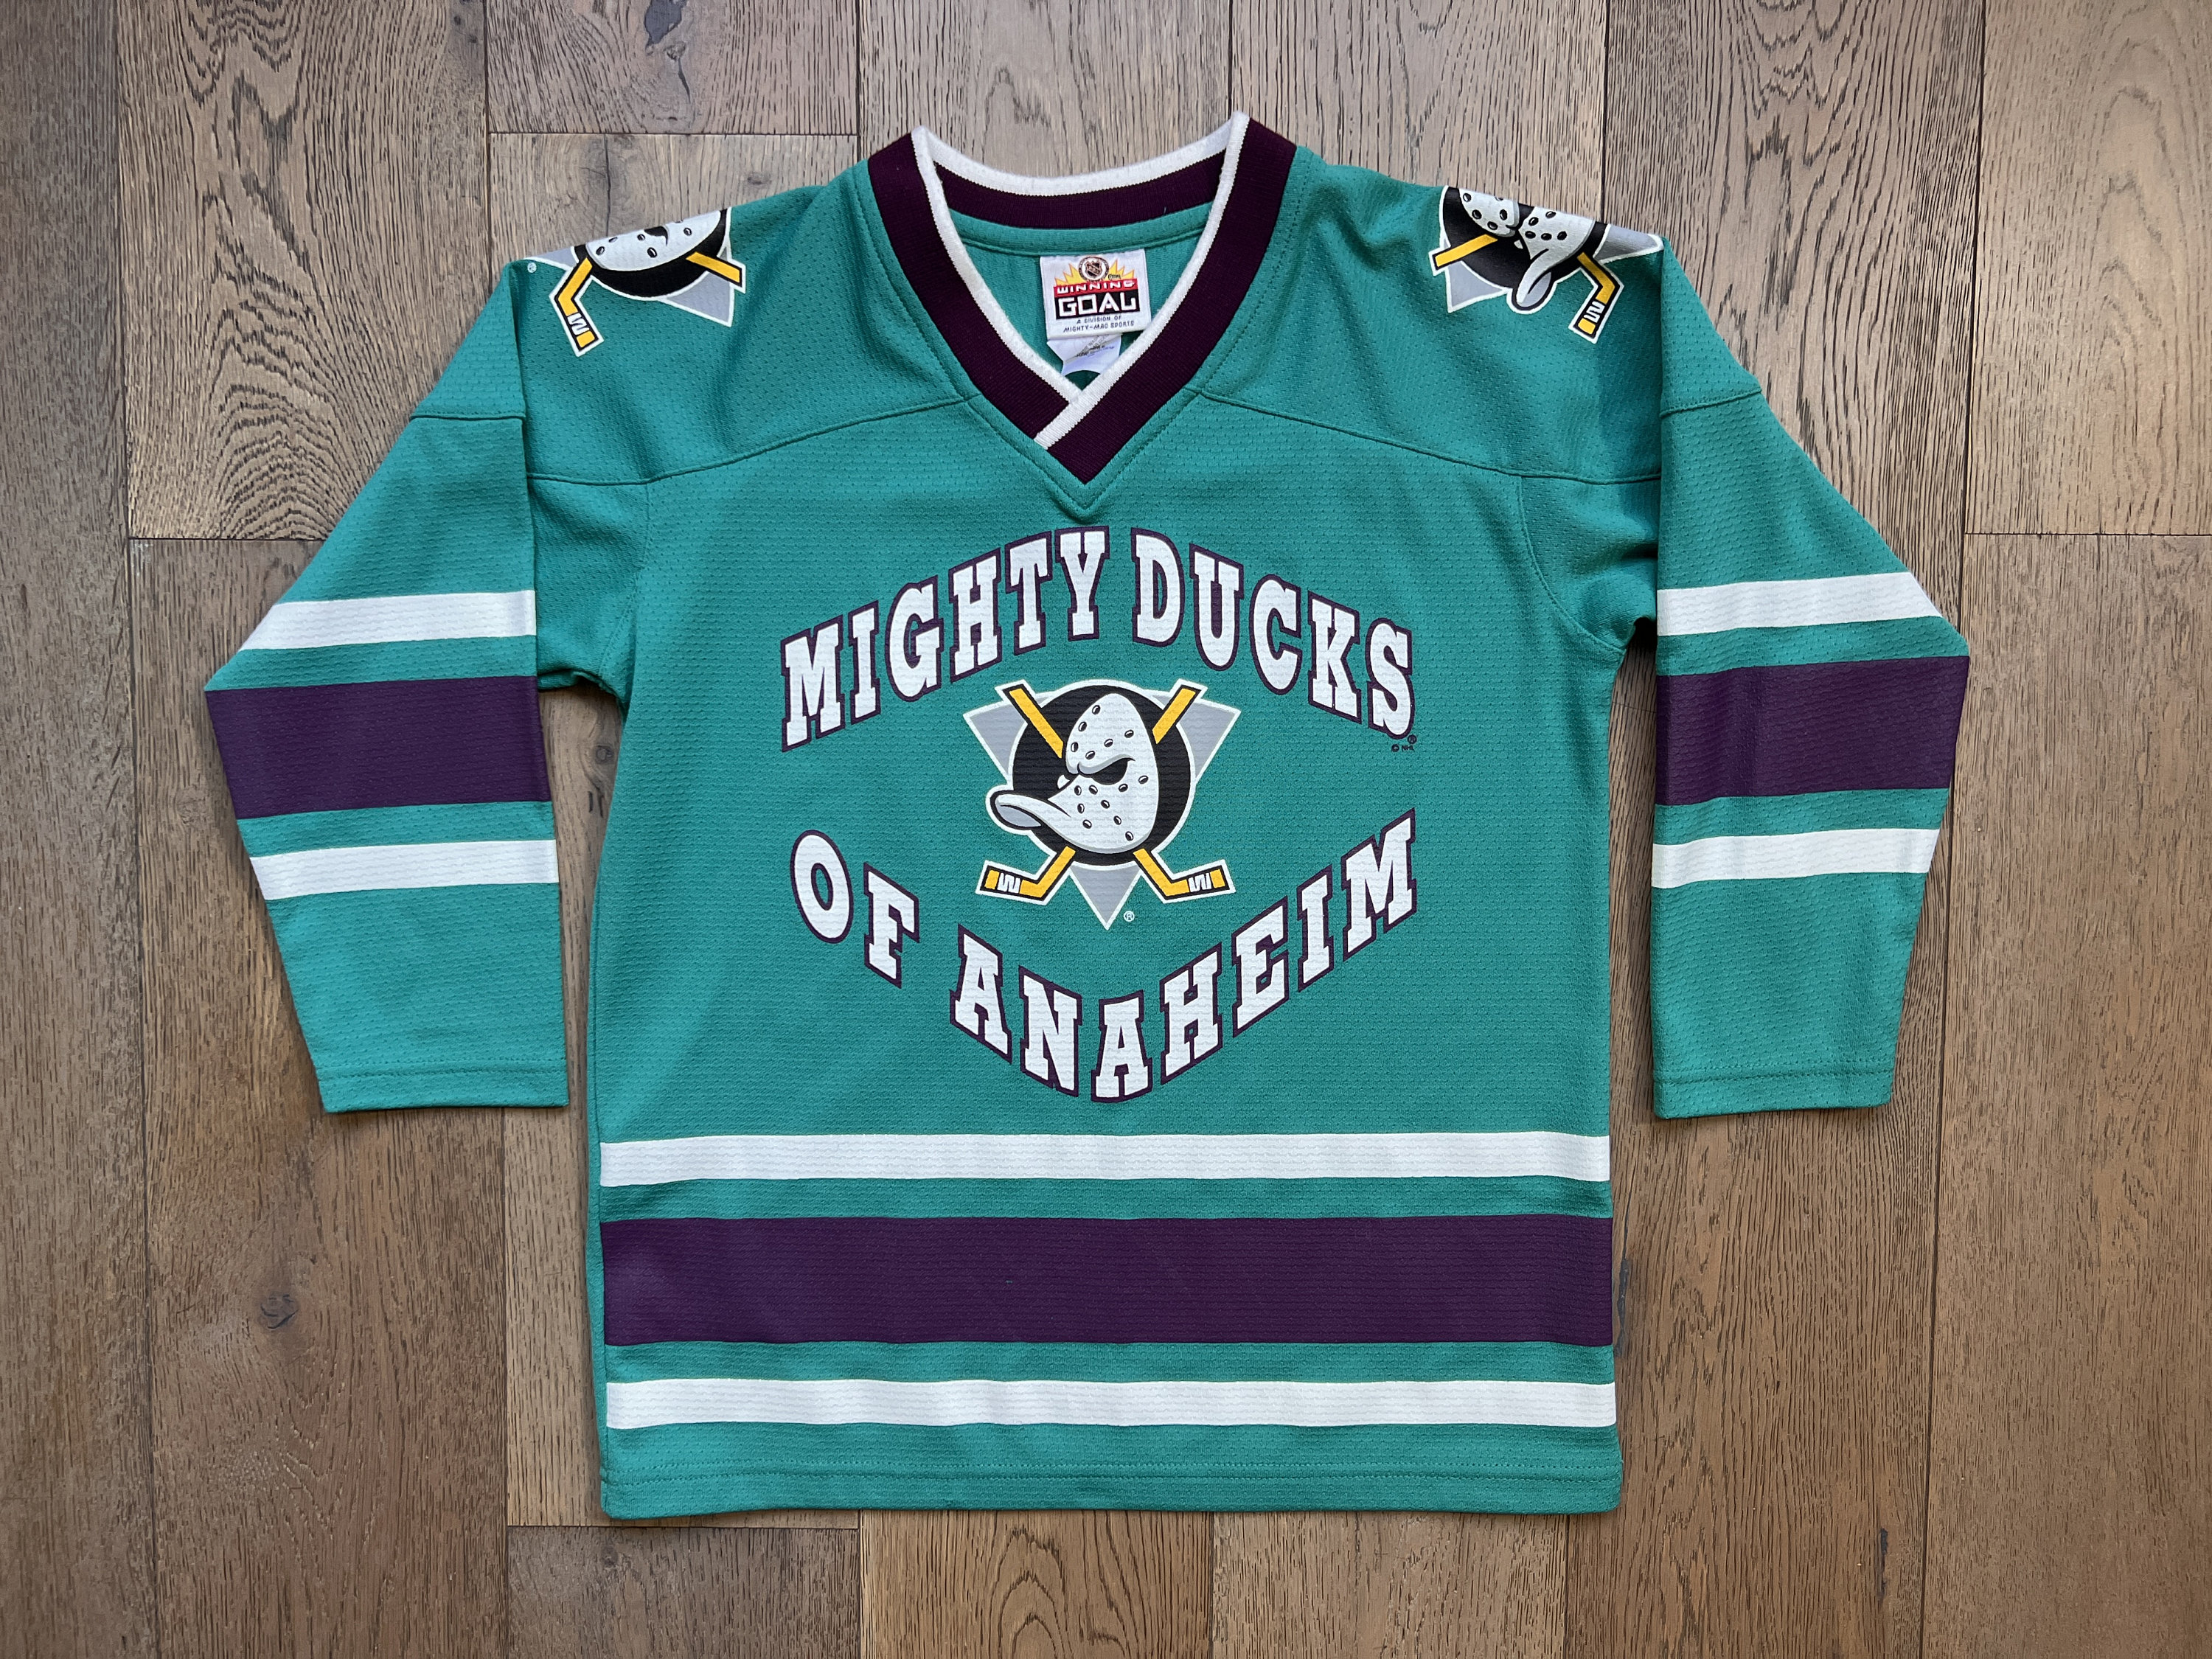 Charlie Conway 96 Anaheim Ducks Hockey Jersey Costume Mighty 2 D2 Movie  Uniform